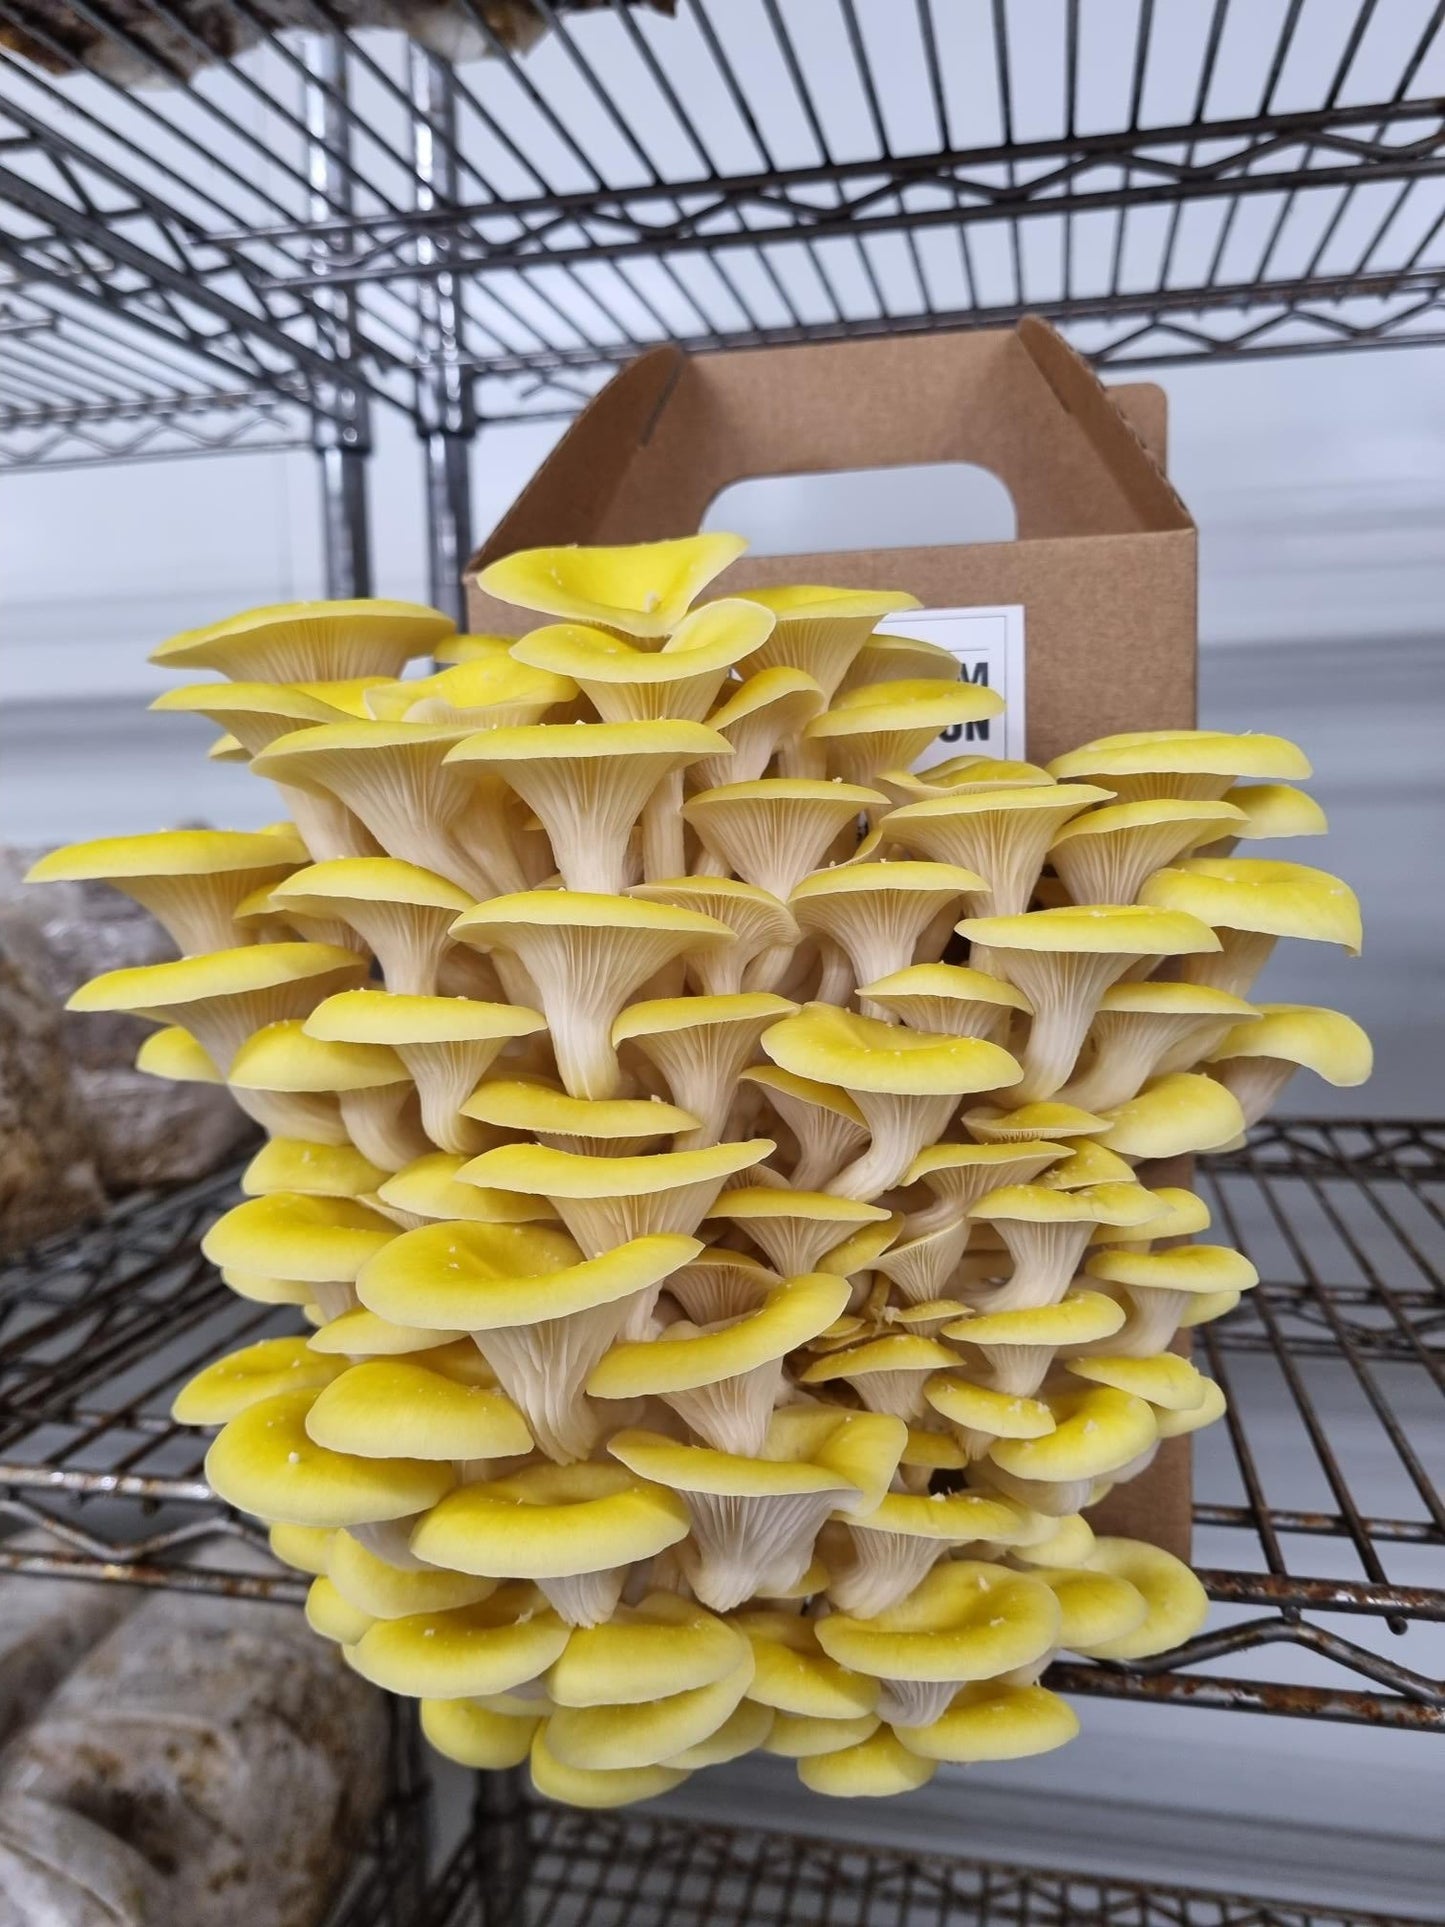 Yellow Oyster Mushroom Grow Kit - The Mushroom Connection